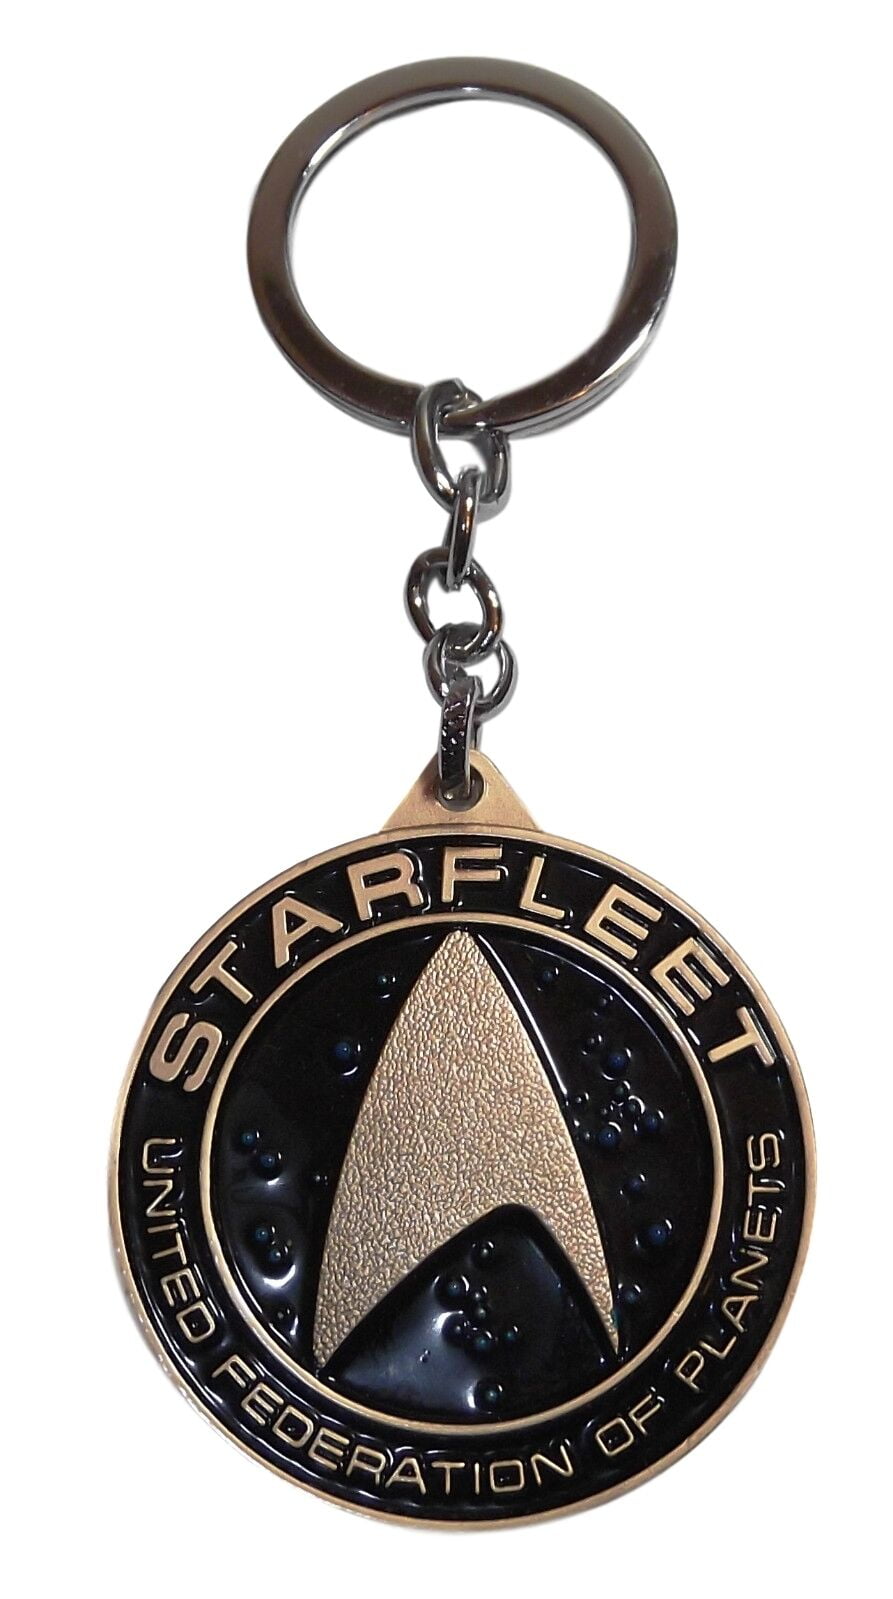 STAR TREK STARFLEET Acrylic Keychain Key chain Collectible gift decor US seller 